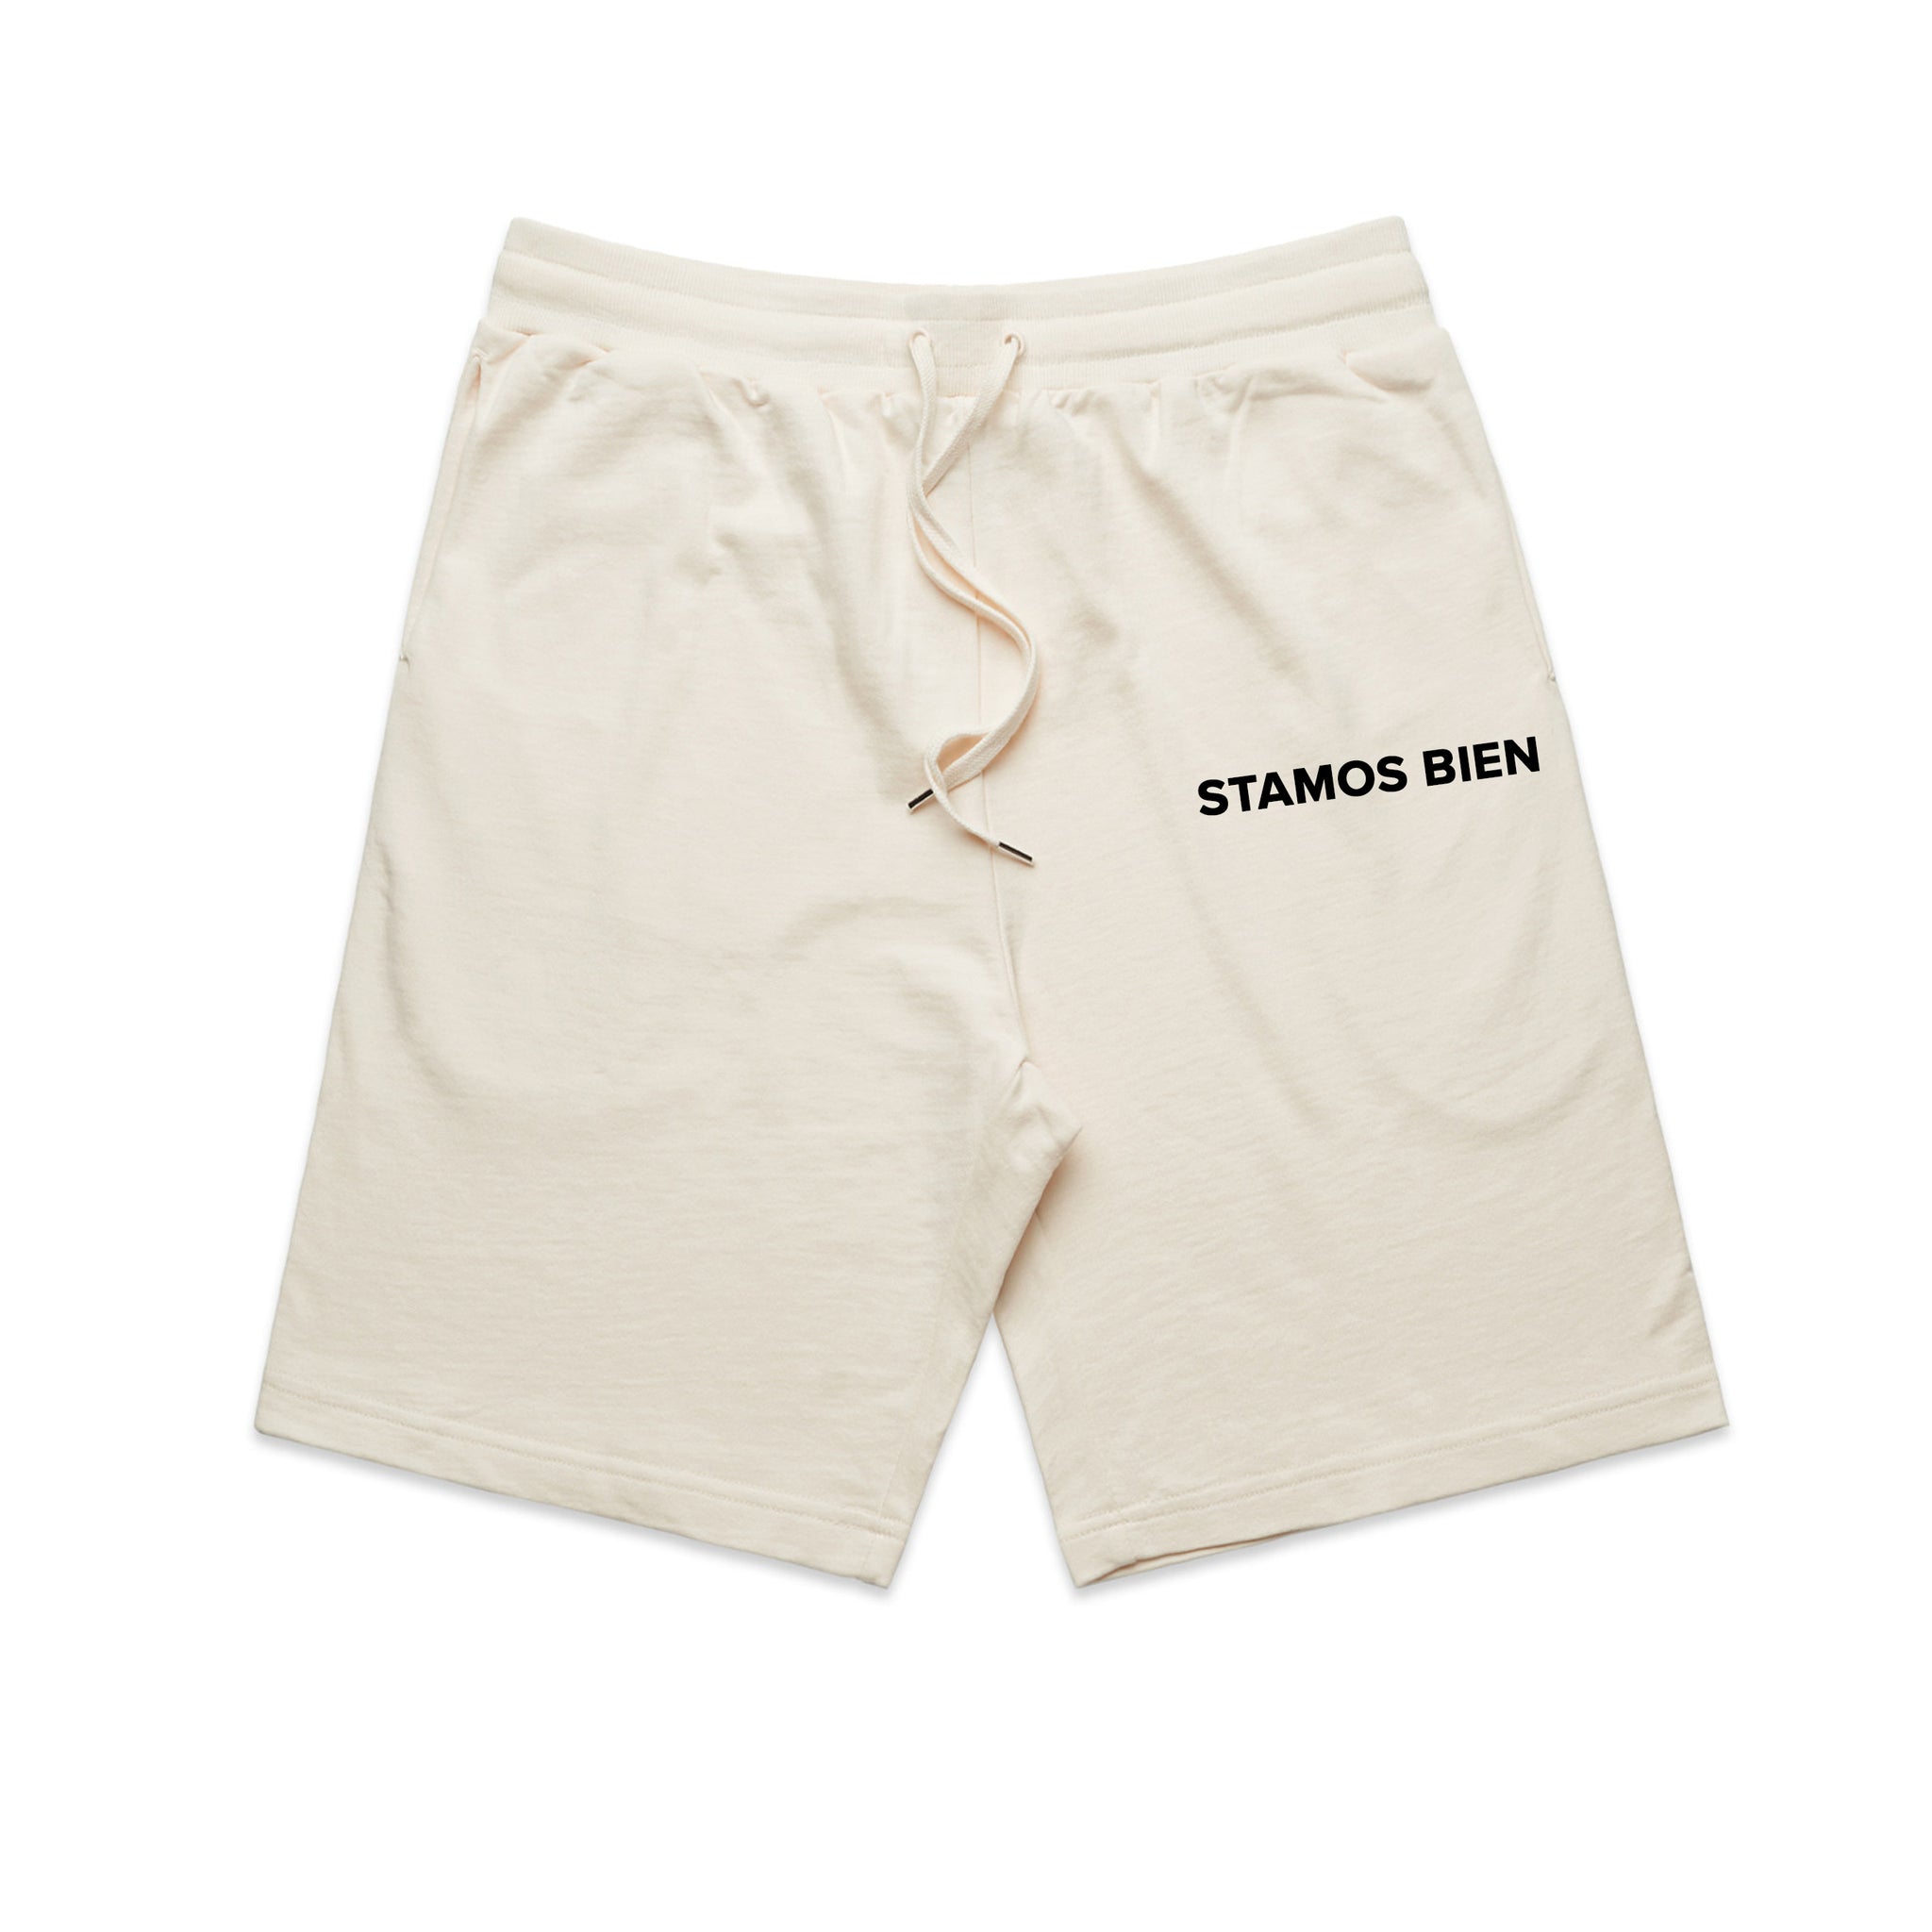 Stamos Bien Everyday Cream Sweat Shorts